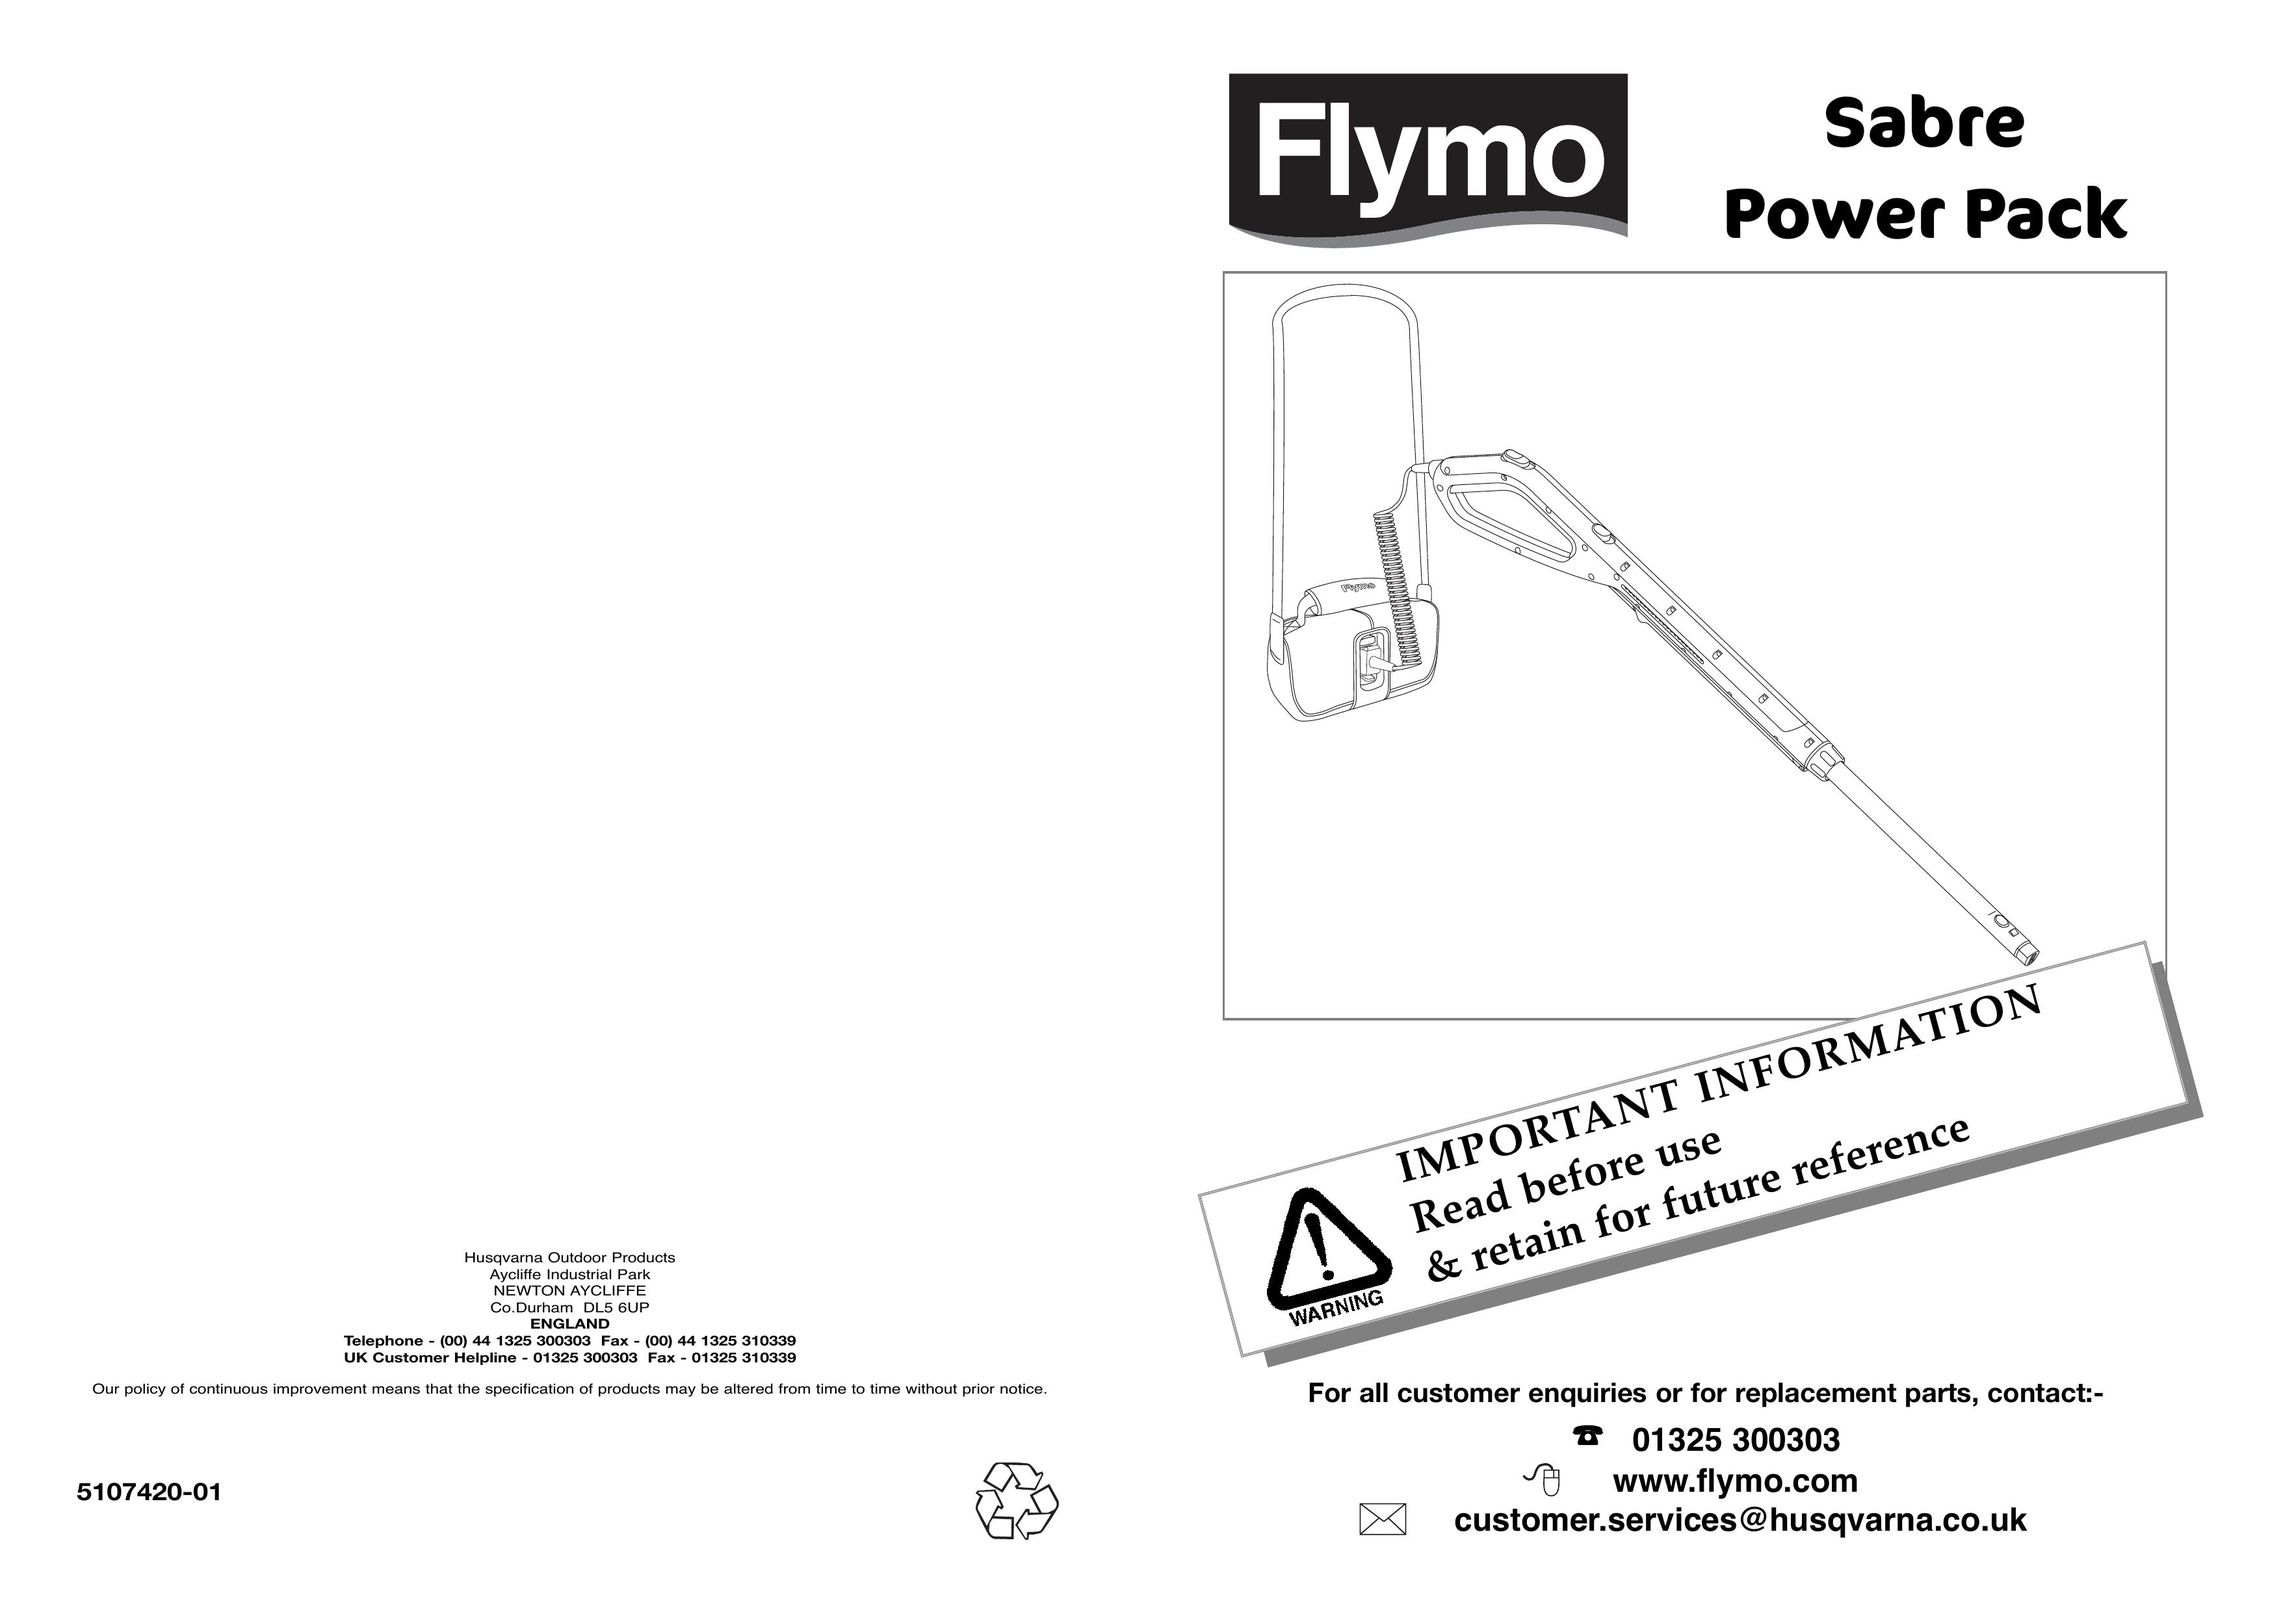 Flymo Sabre Power Pack Cordless Saw User Manual